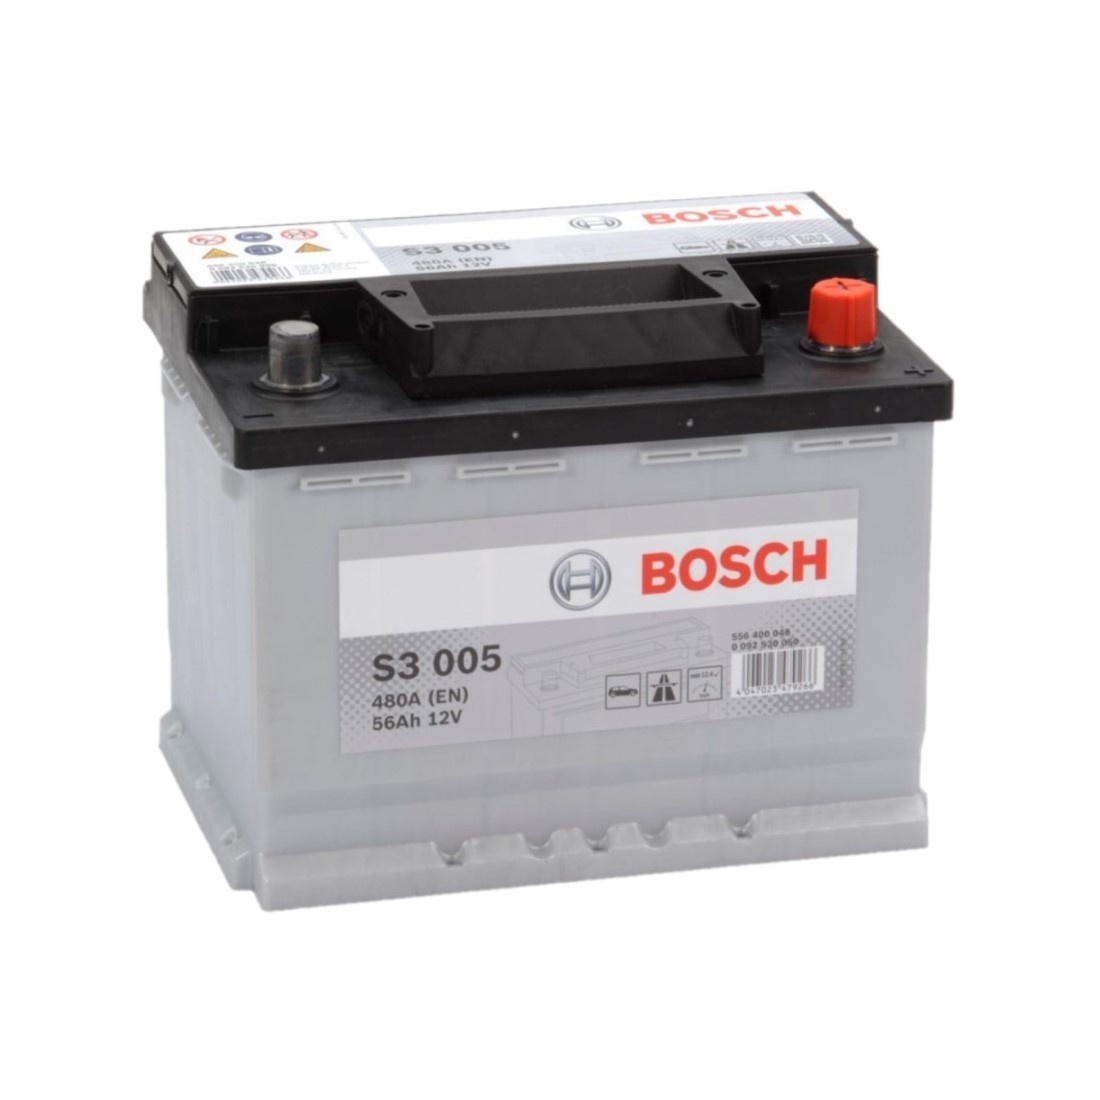 Prooi optie verband Bosch Auto accu 12 volt 56 ah Type S3005 - Accu Service Holland